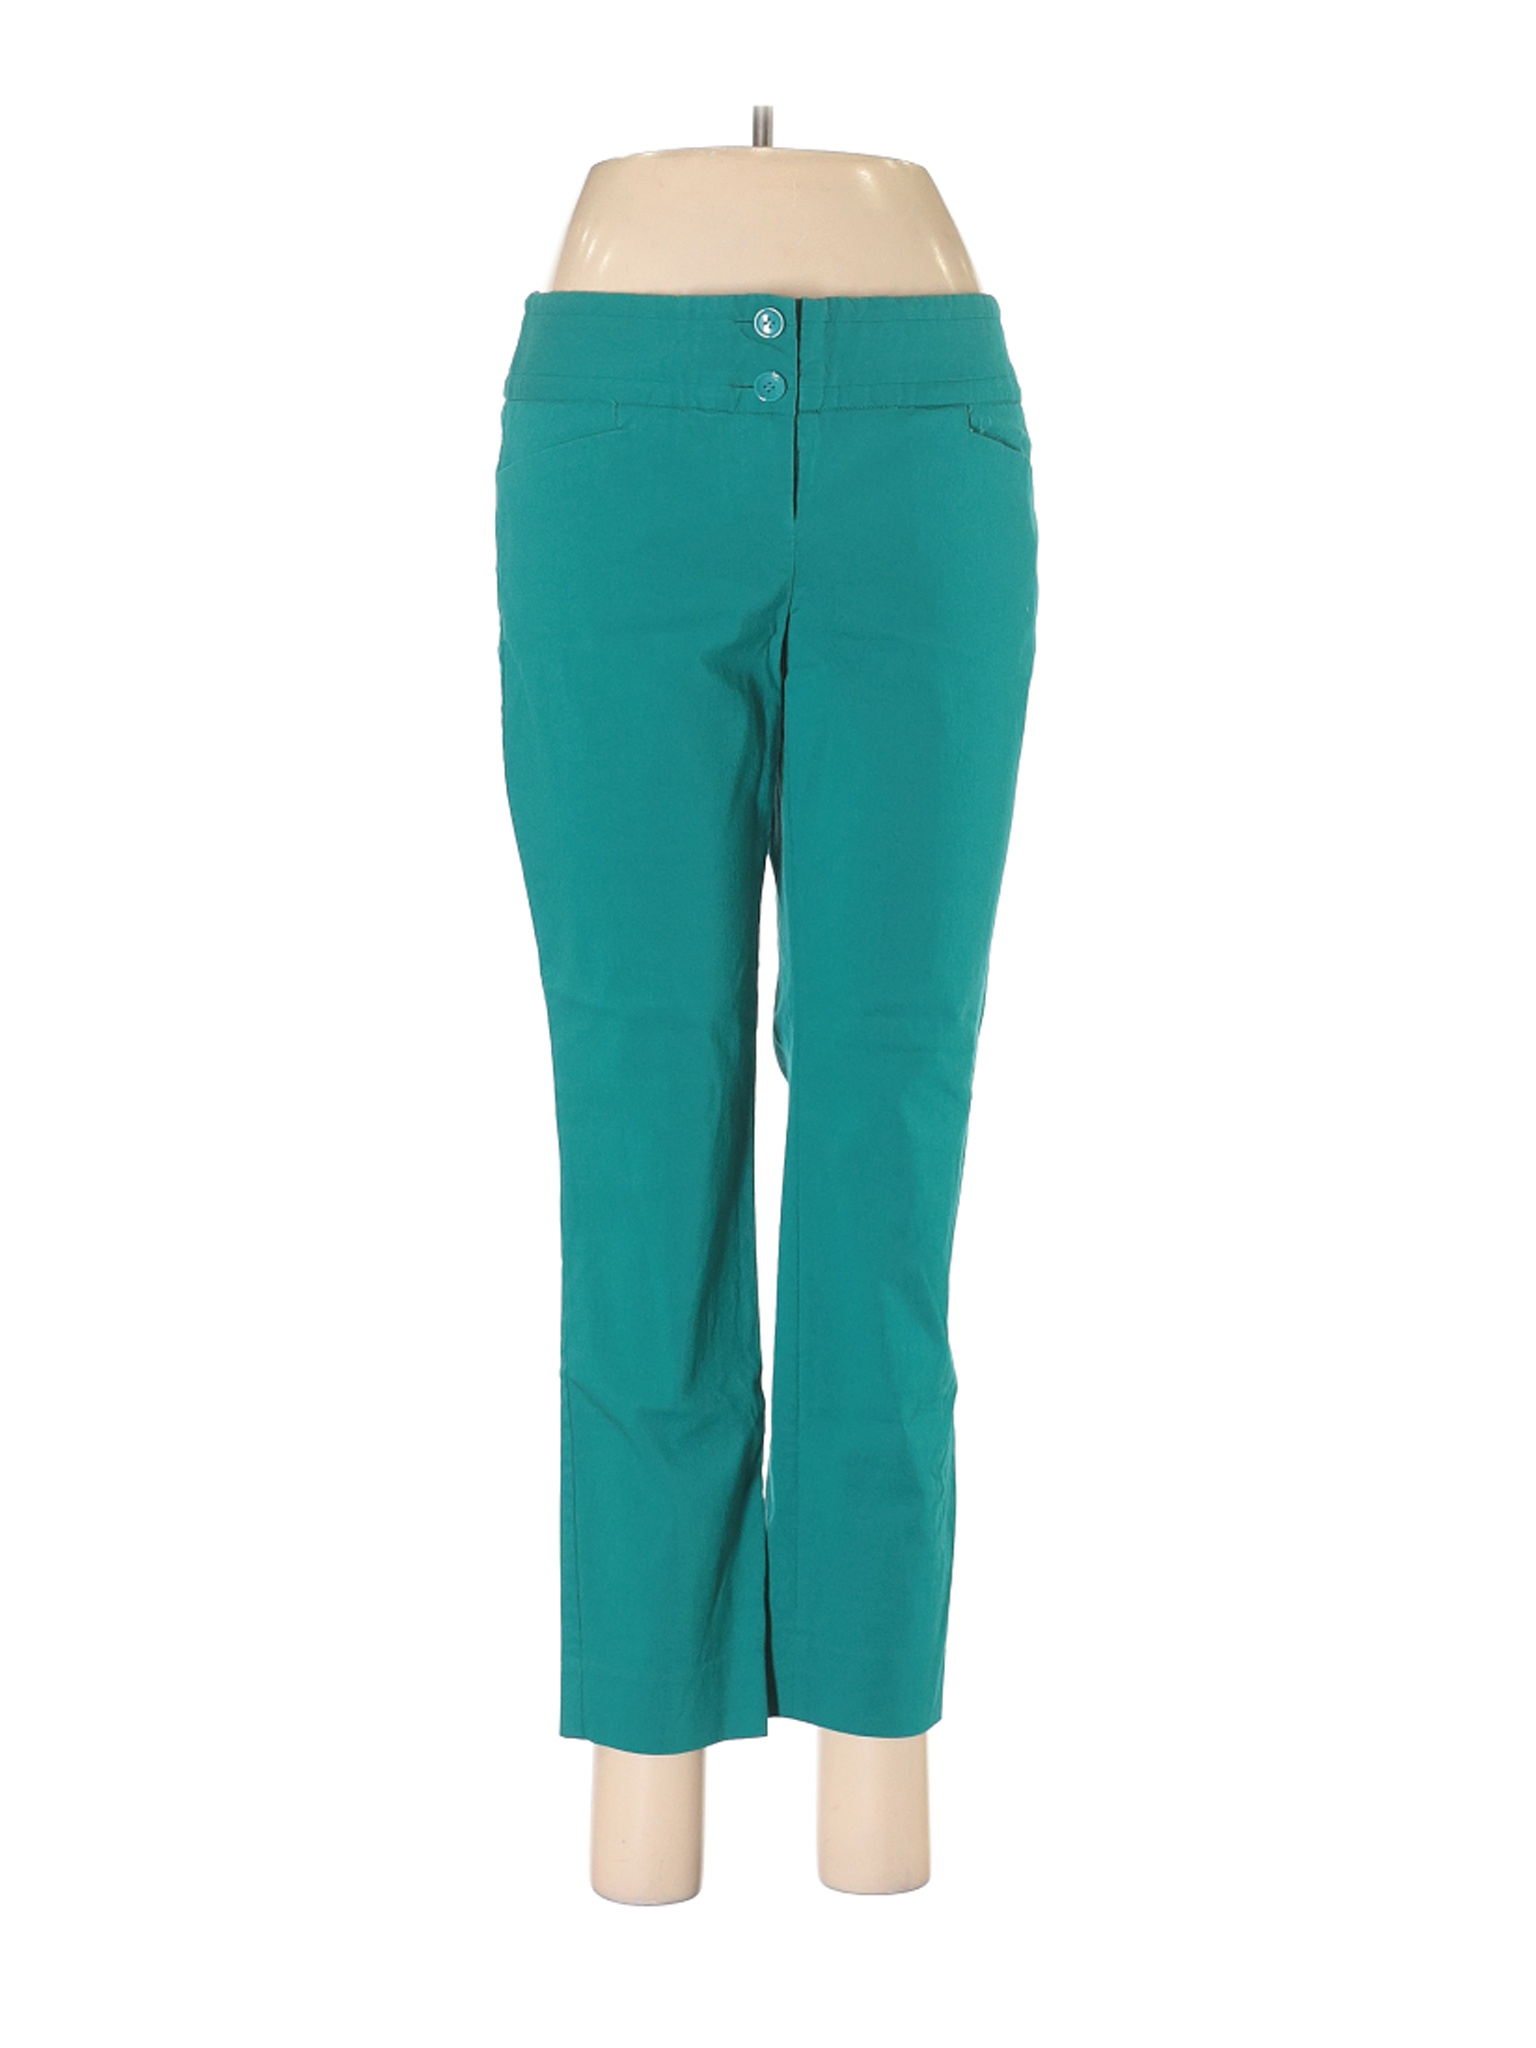 The Limited Women Green Dress Pants 6 | eBay